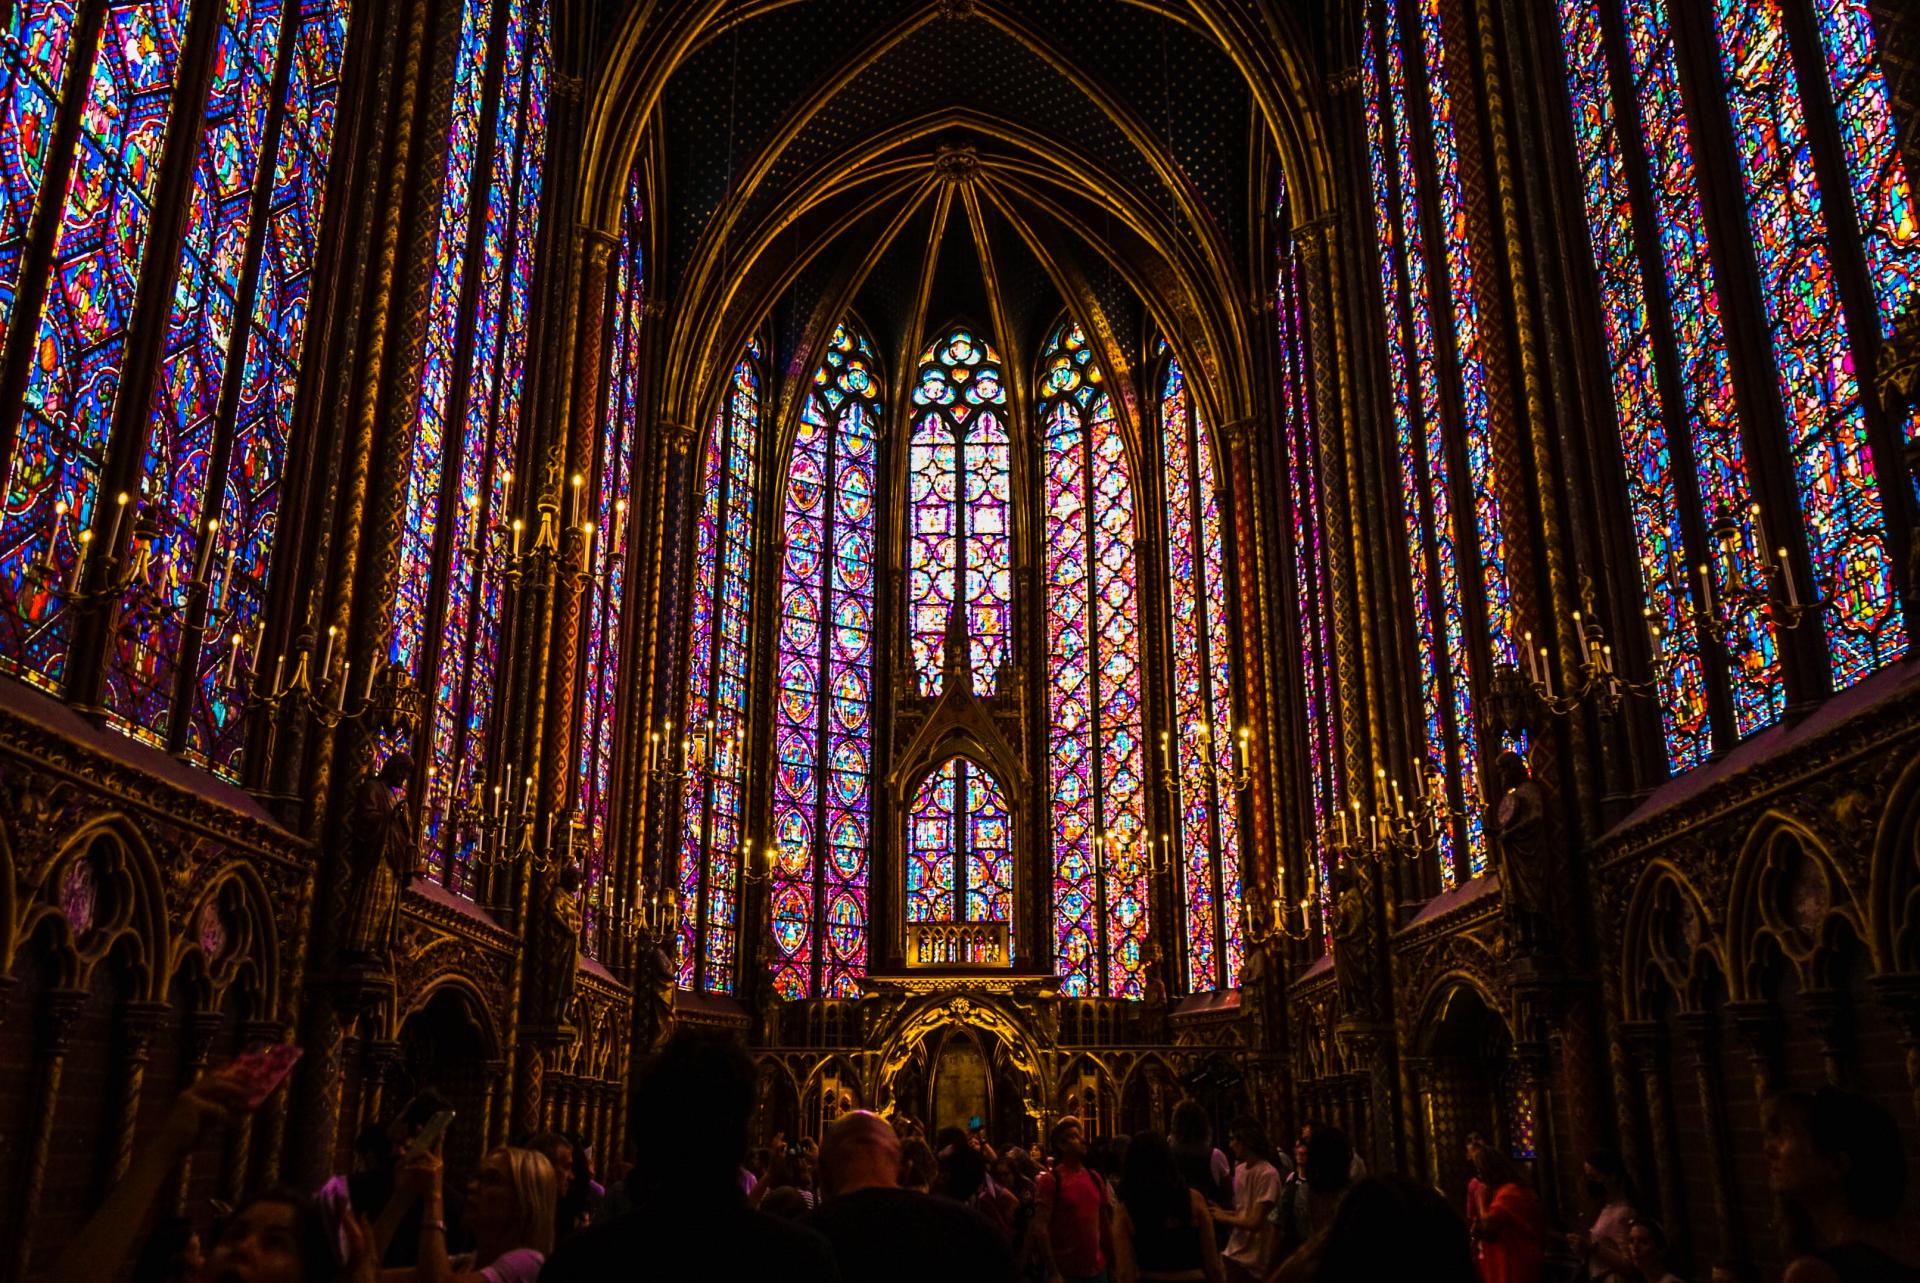 The Christmas masses in Paris